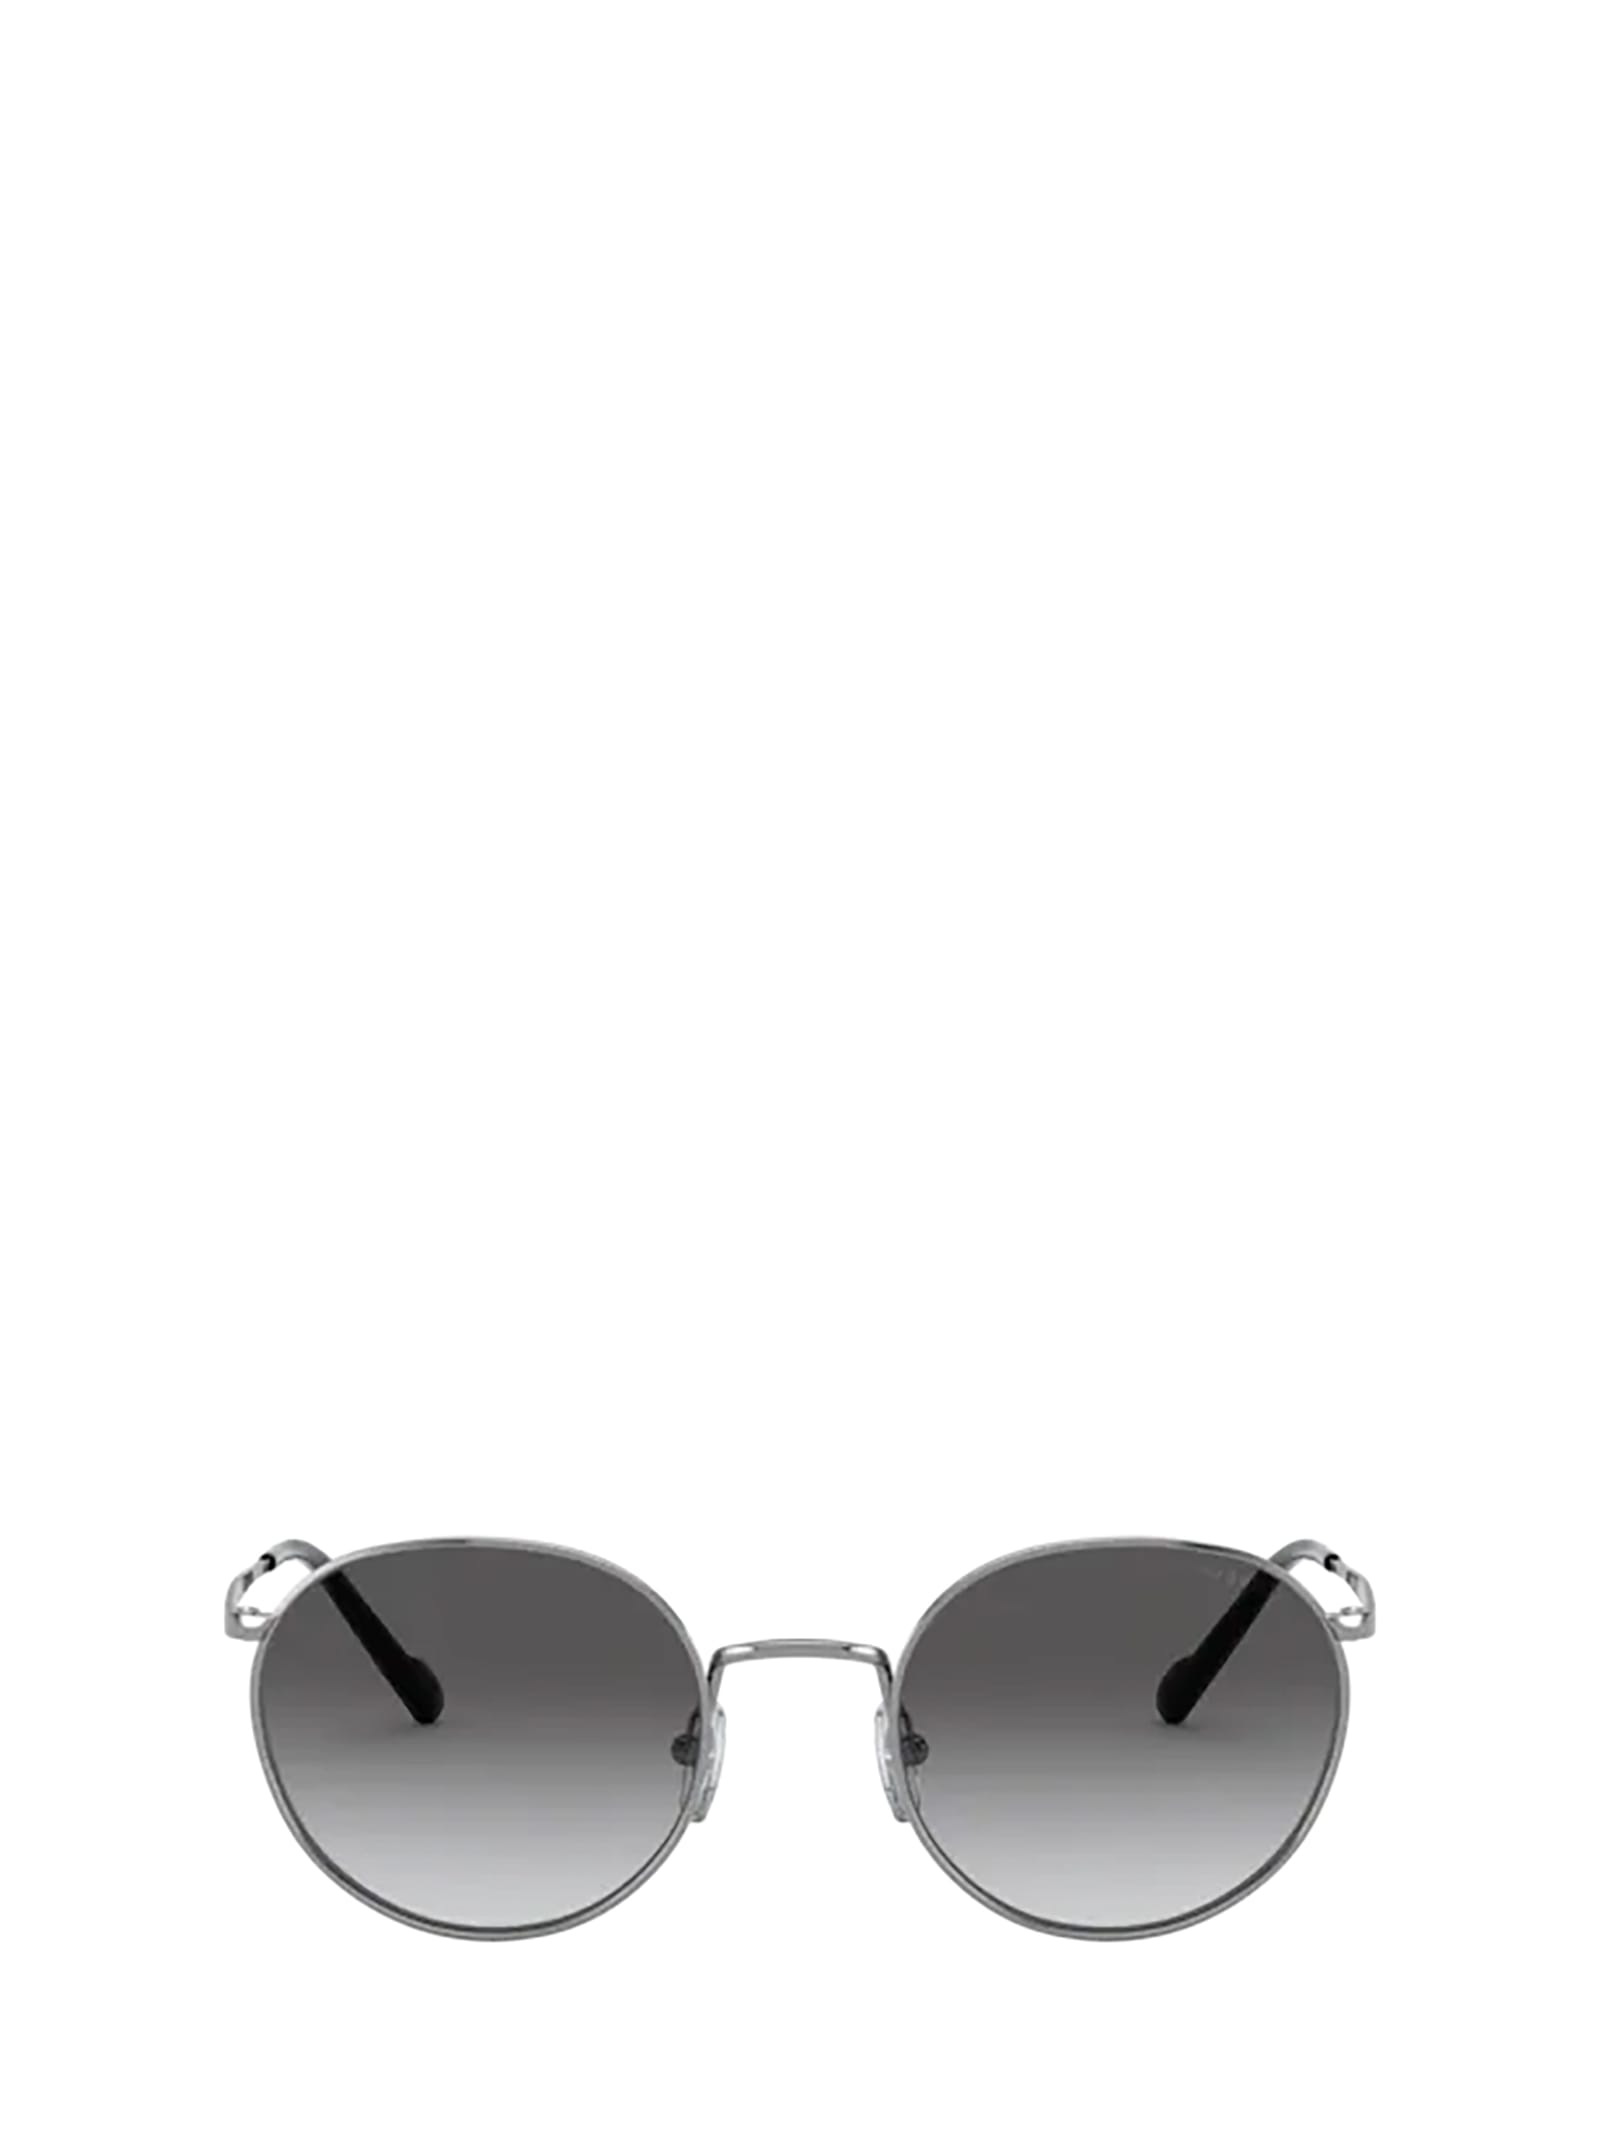 Vogue Eyewear Vogue Vo4182s Gunmetal Sunglasses